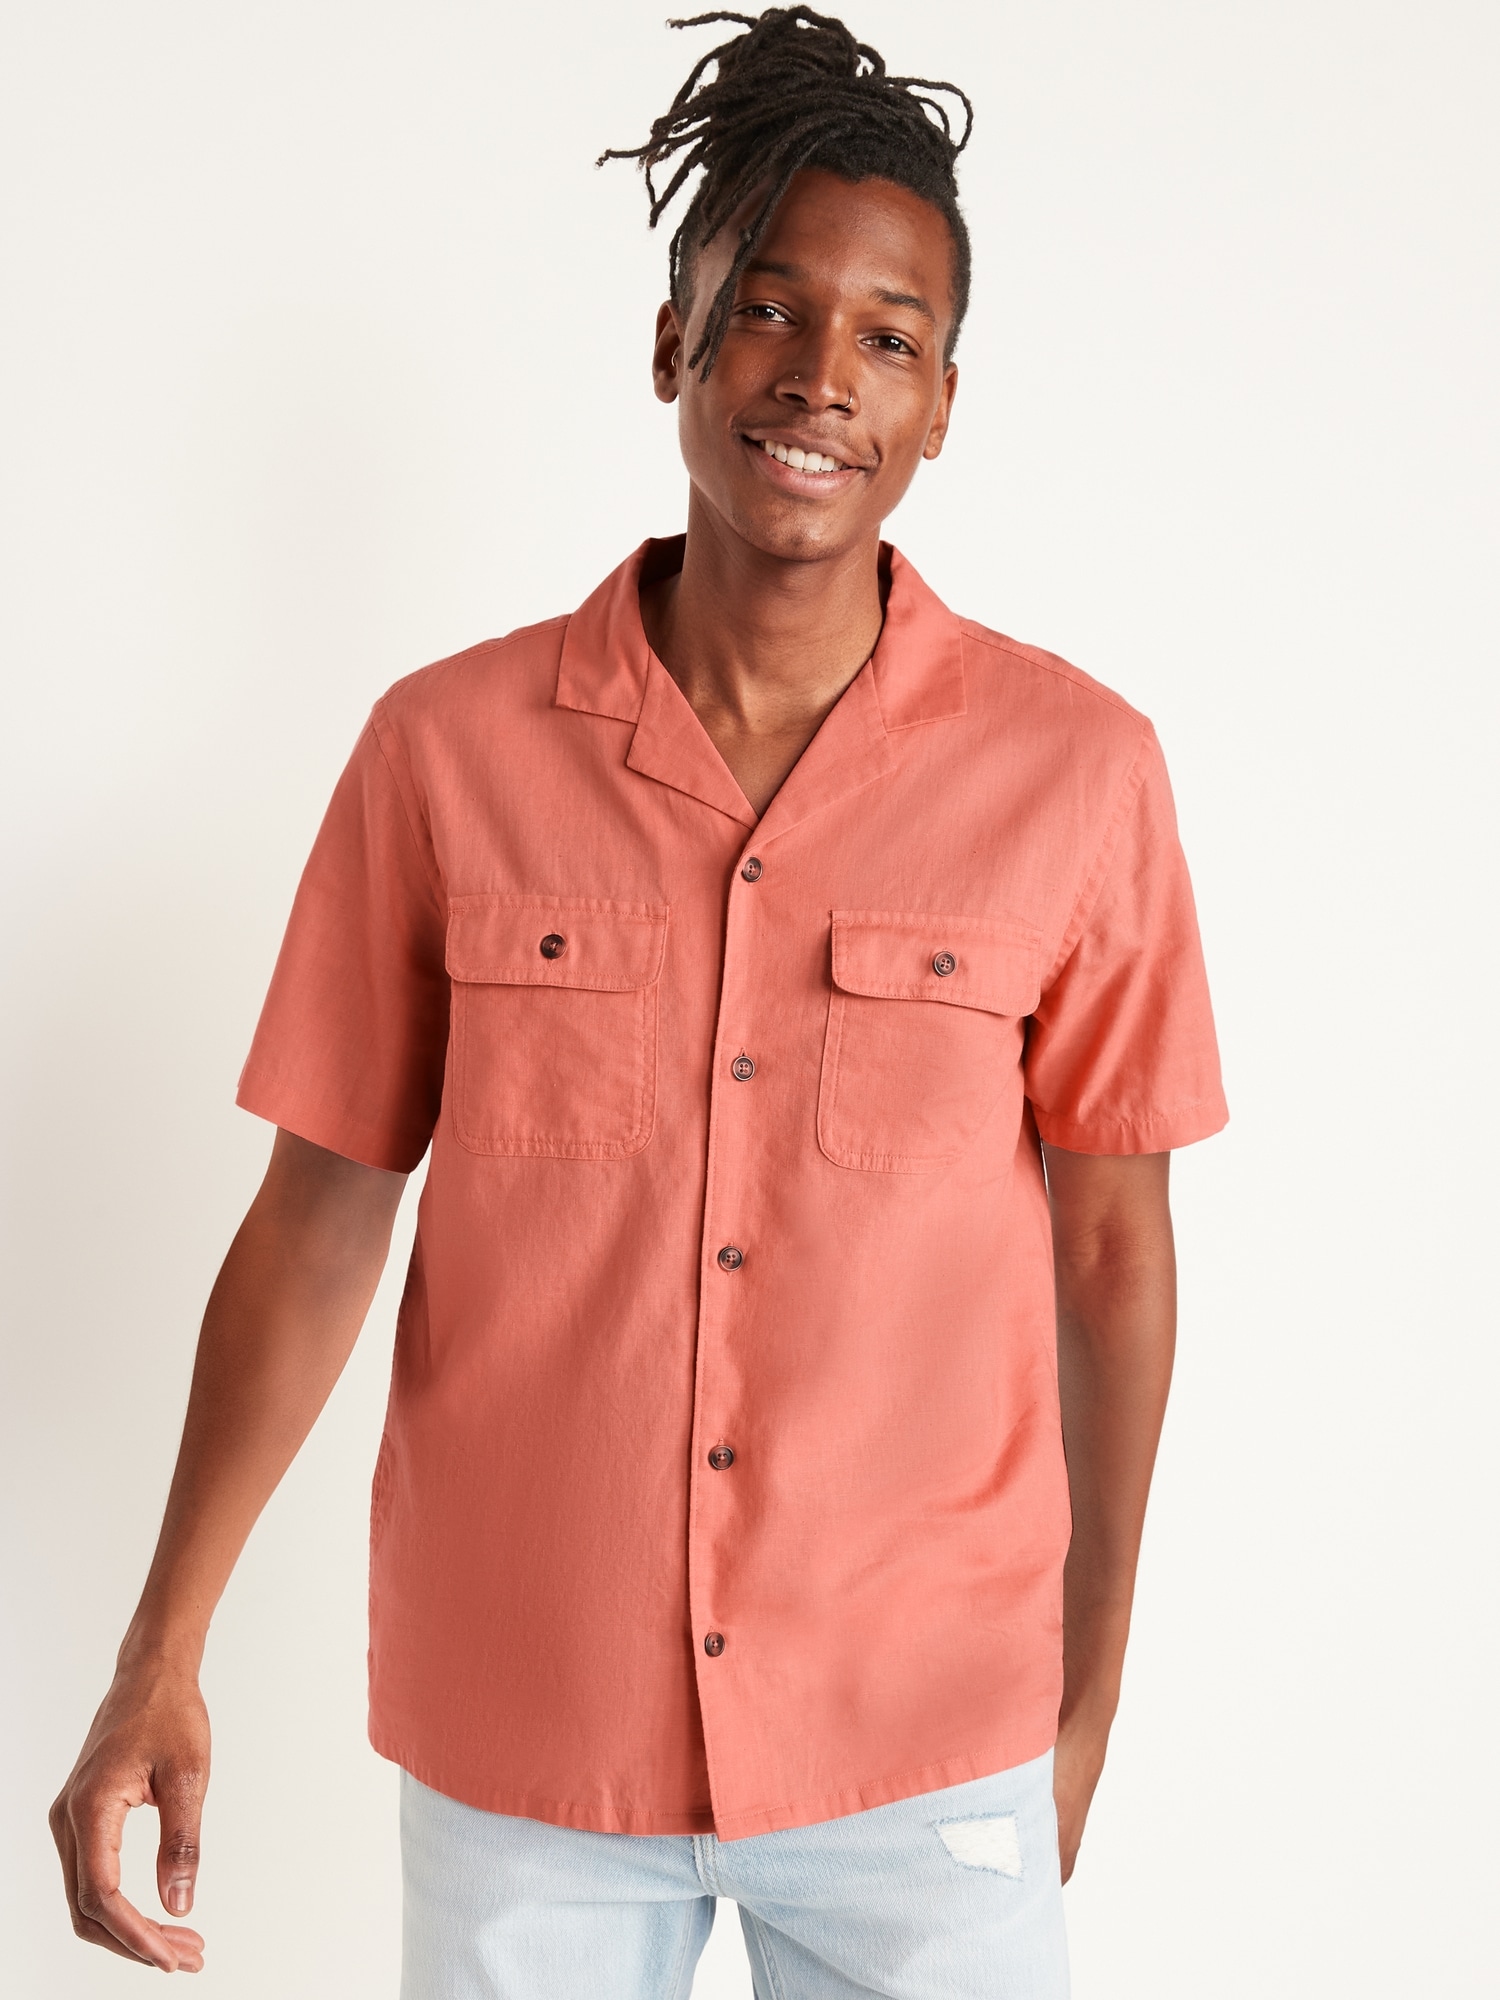 Men's Camp Collar Linen-Blend Shirt, Men's Up To 25% Off Select Styles